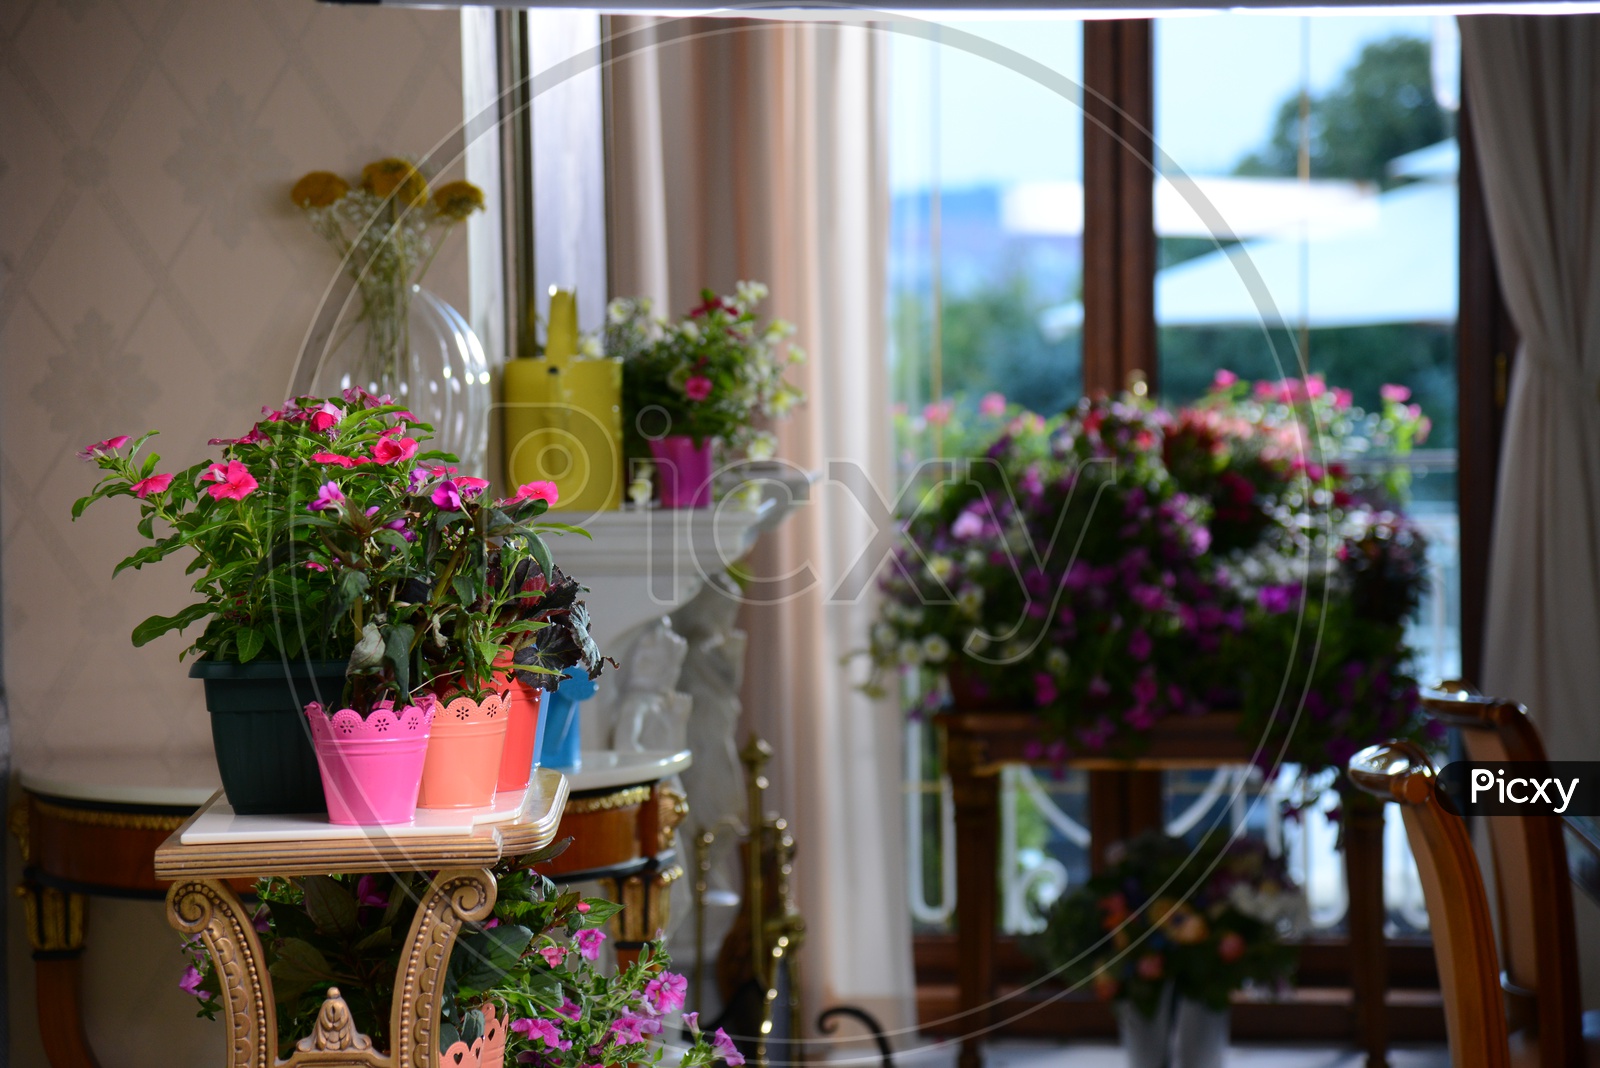 Flower Pots in a House